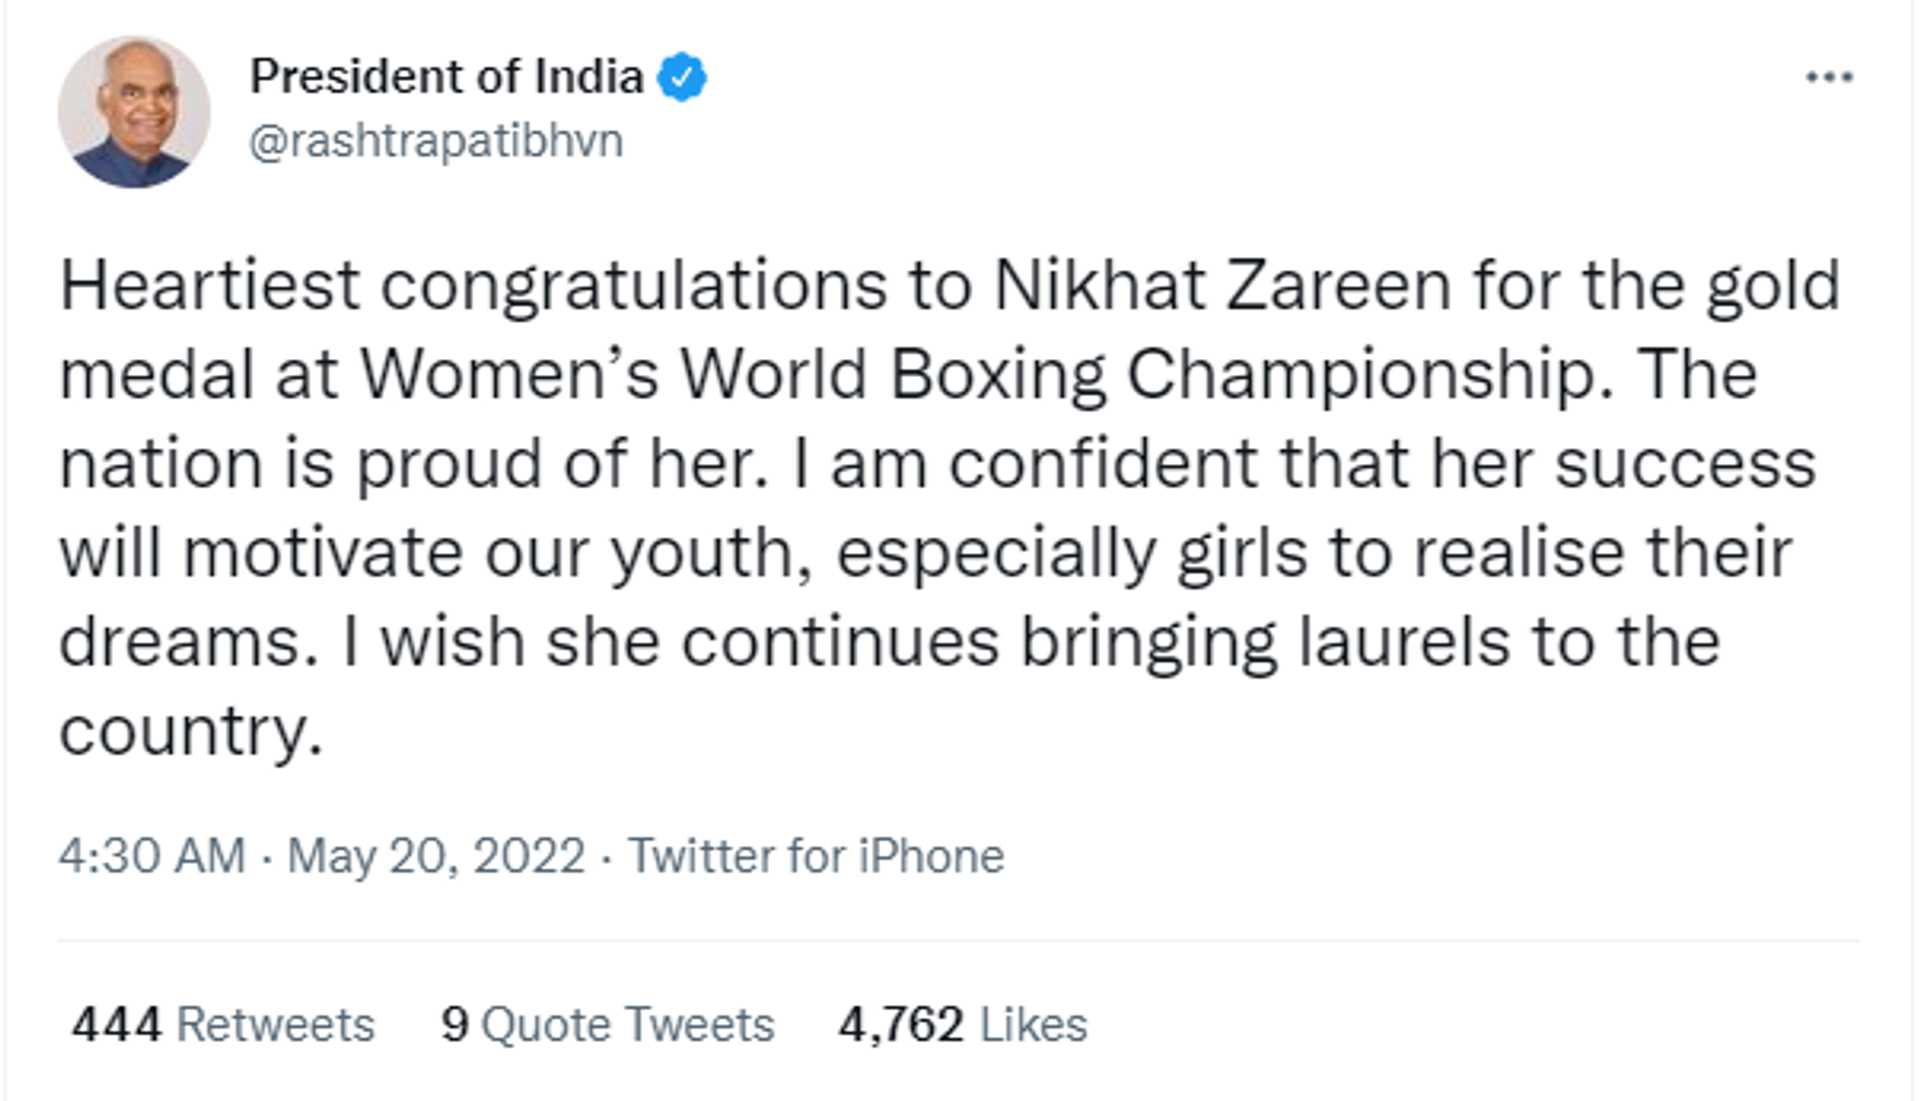 President Ram Nath Kovind Hails Nikhat Zareen's Victory in World Boxing Championships - Sputnik International, 1920, 20.05.2022